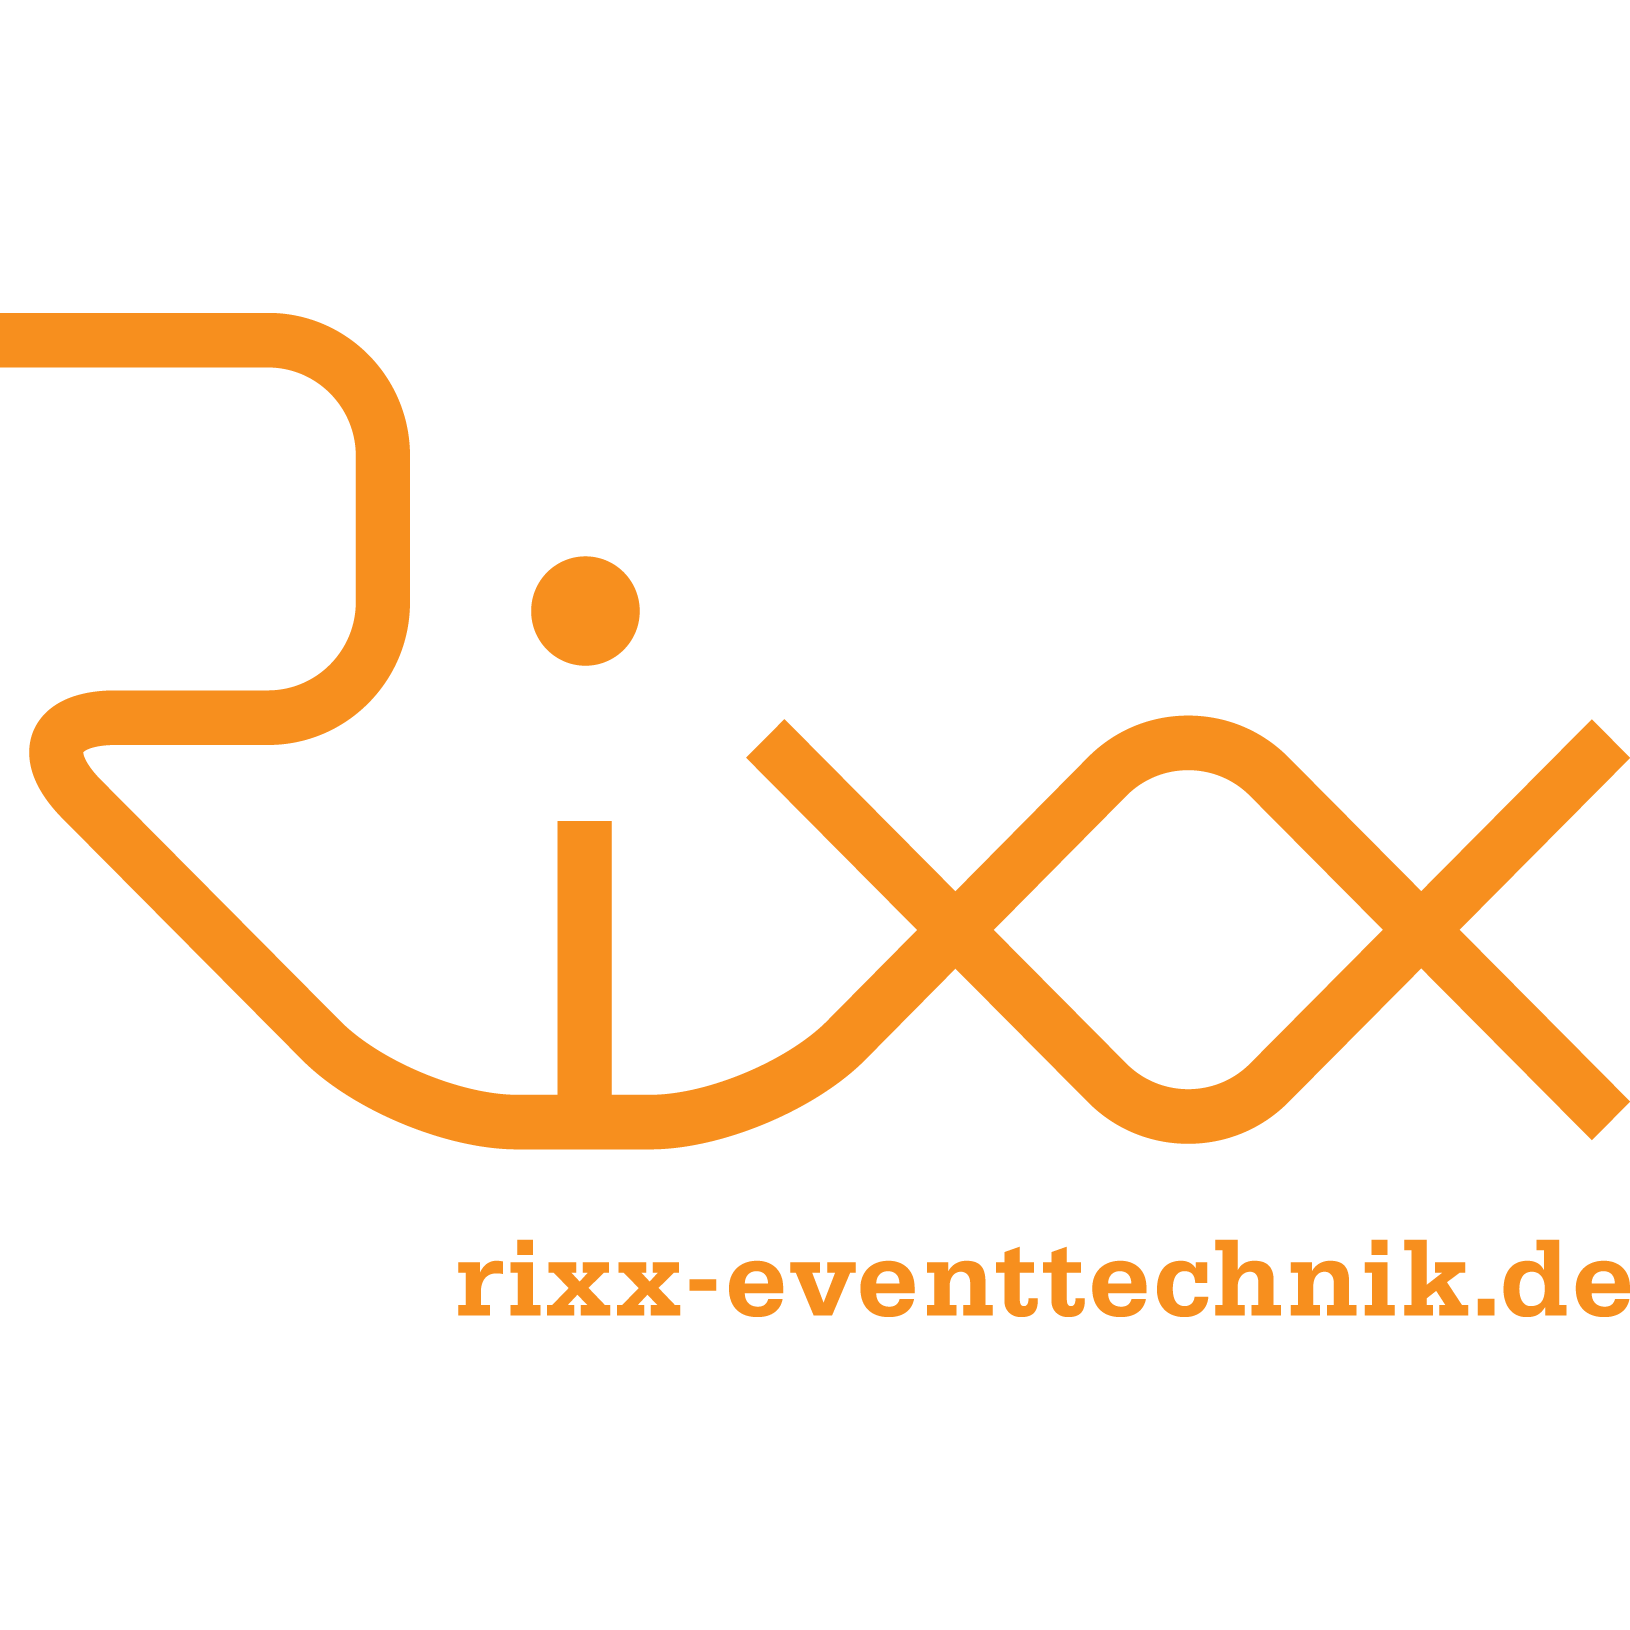 Rixx Eventtechnik GmbH & Co. KG in Wülfershausen an der Saale - Logo